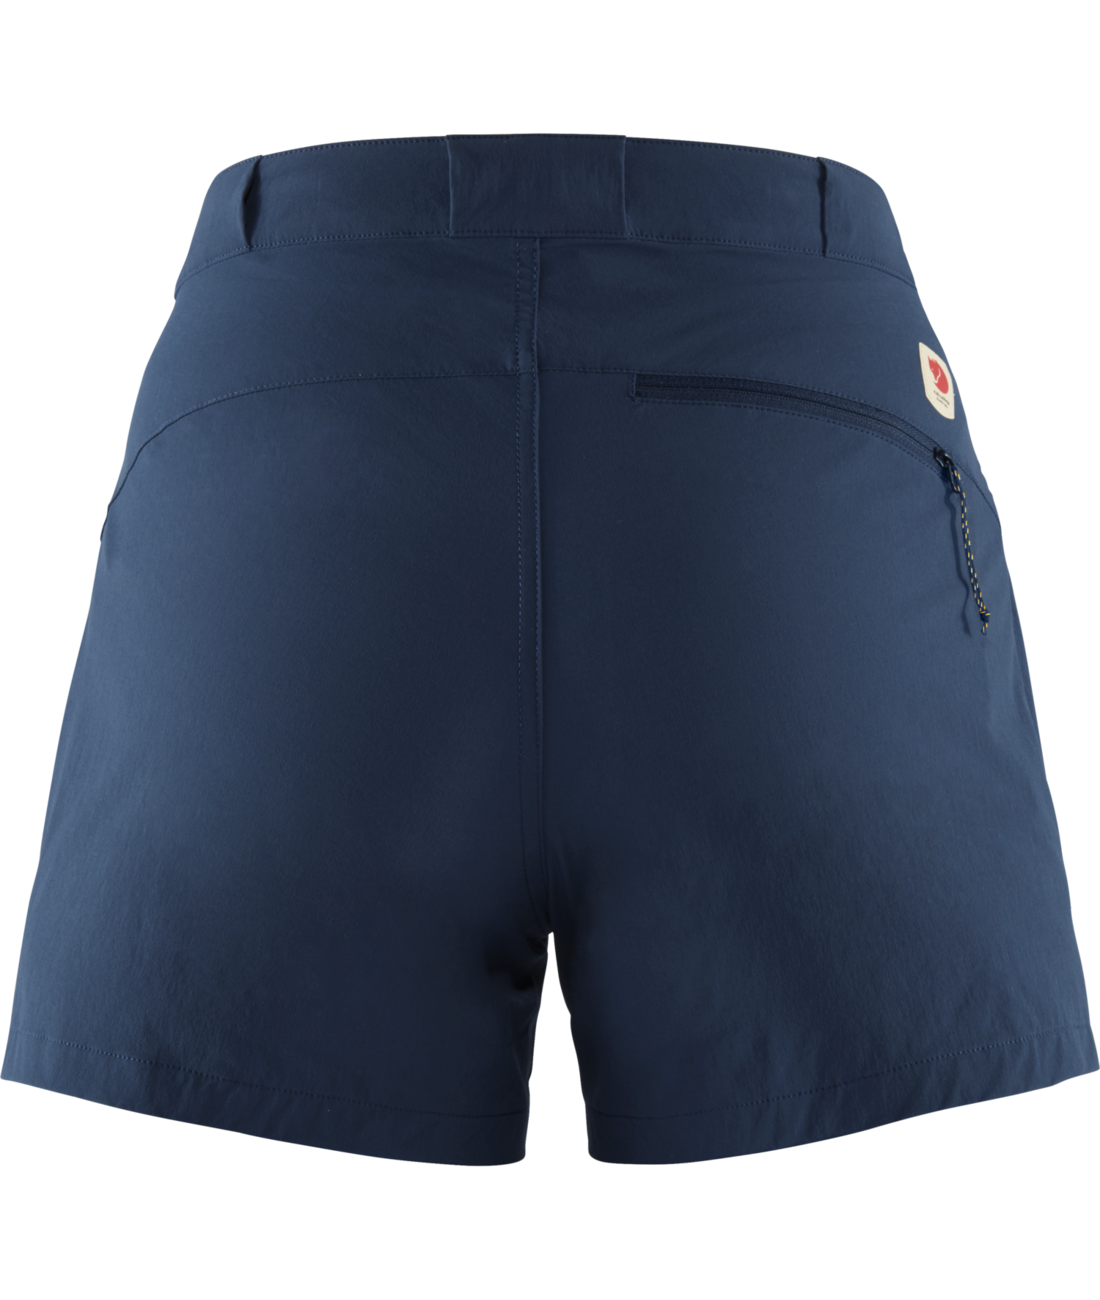 High Coast Lite Shorts W